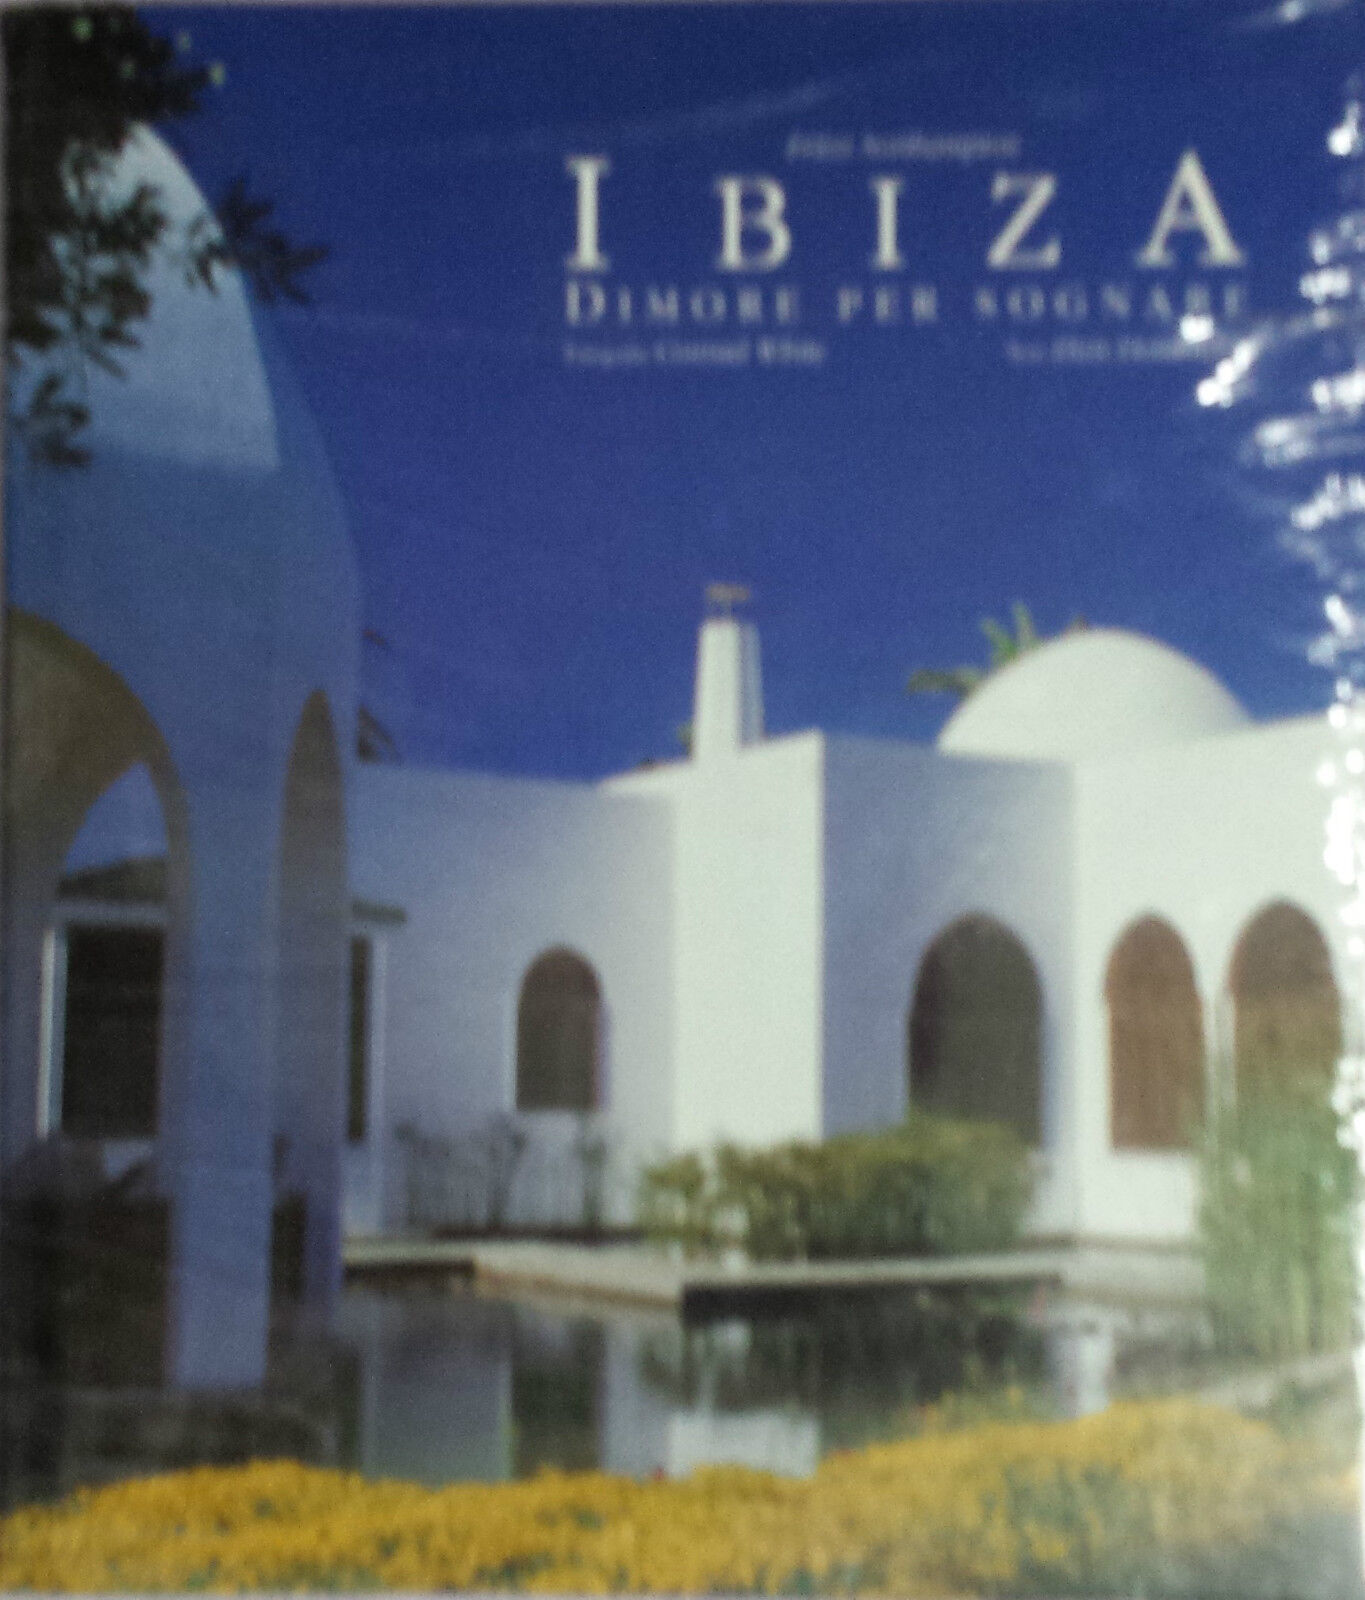 Ibiza, dimorare per sognare - Fritzi Northampton - K?nemann - 2000 - G